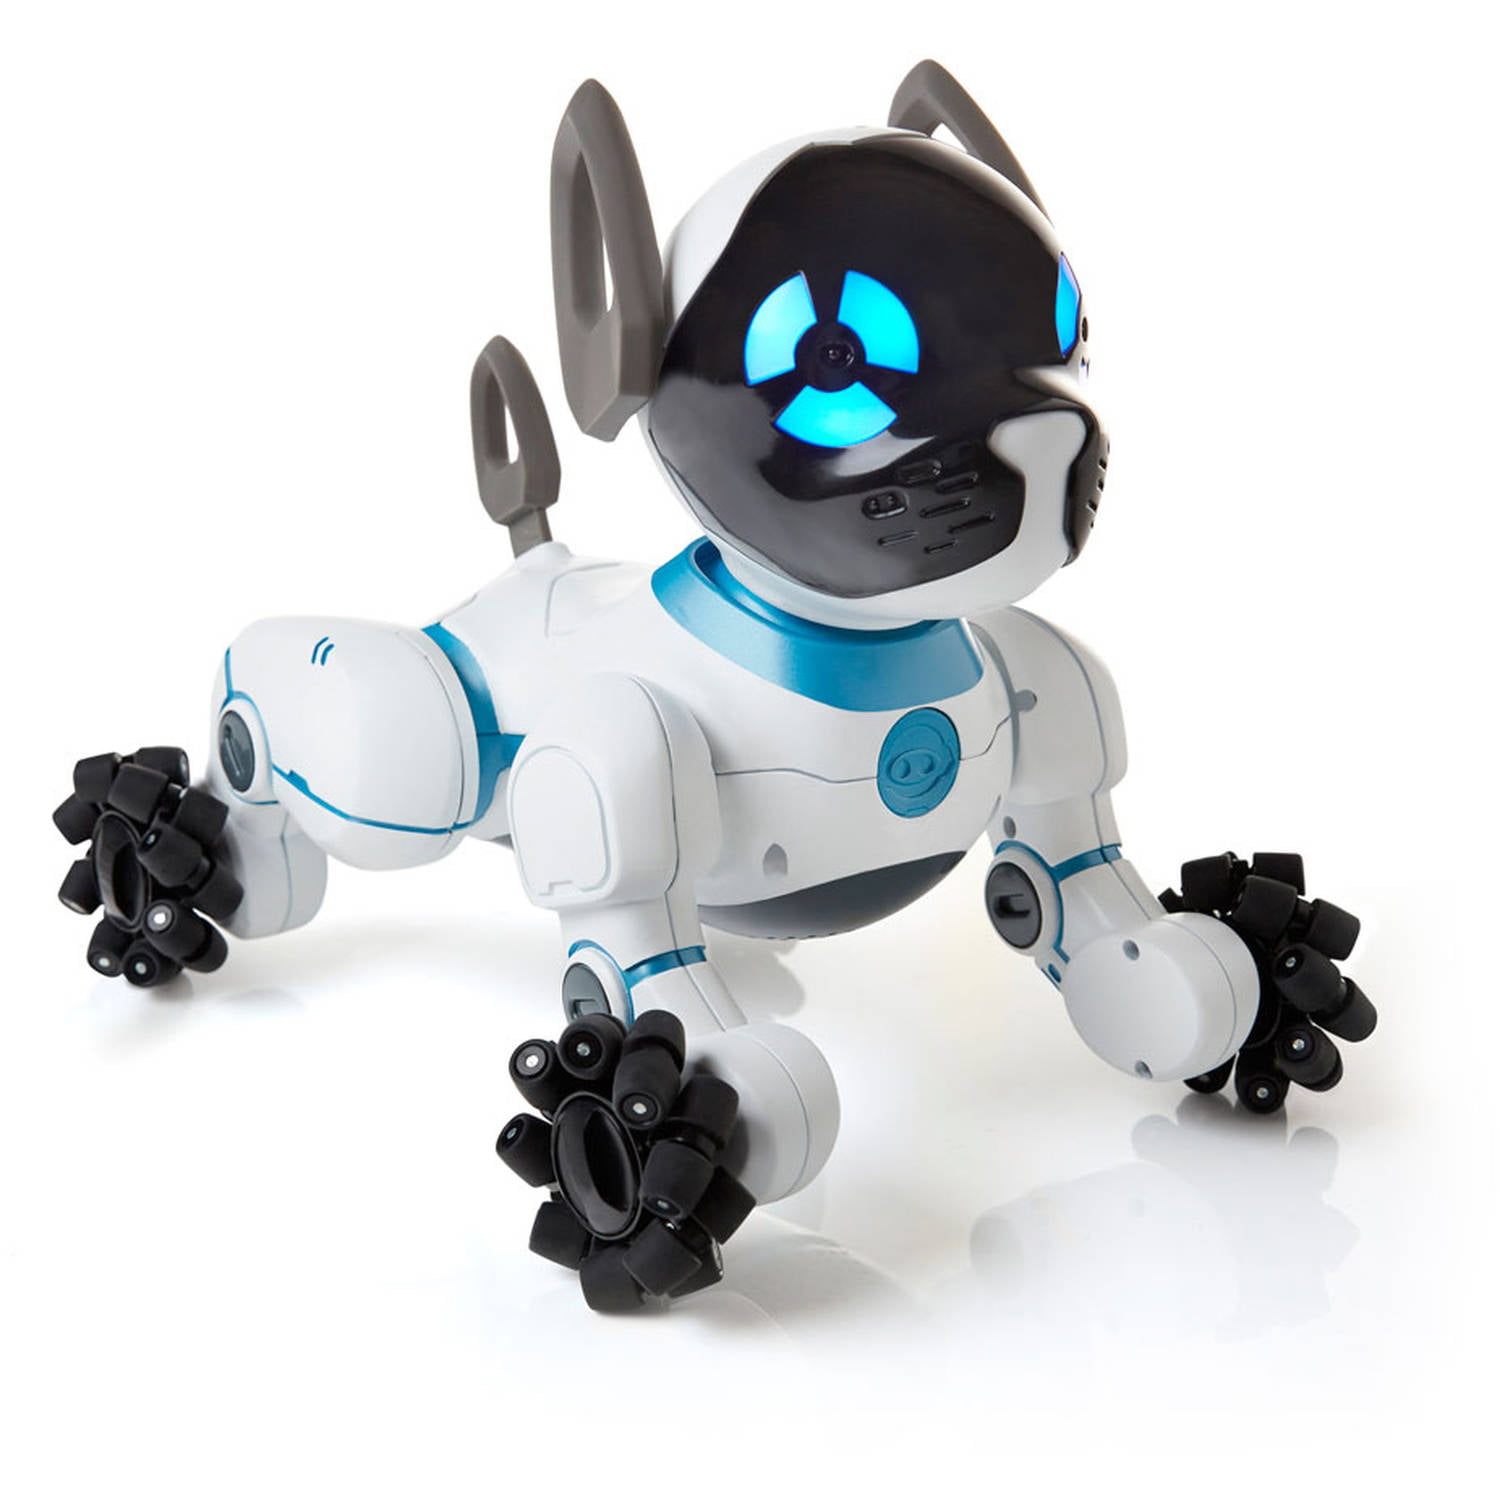 Wowwee Chip Robot Dog - Walmart.com 